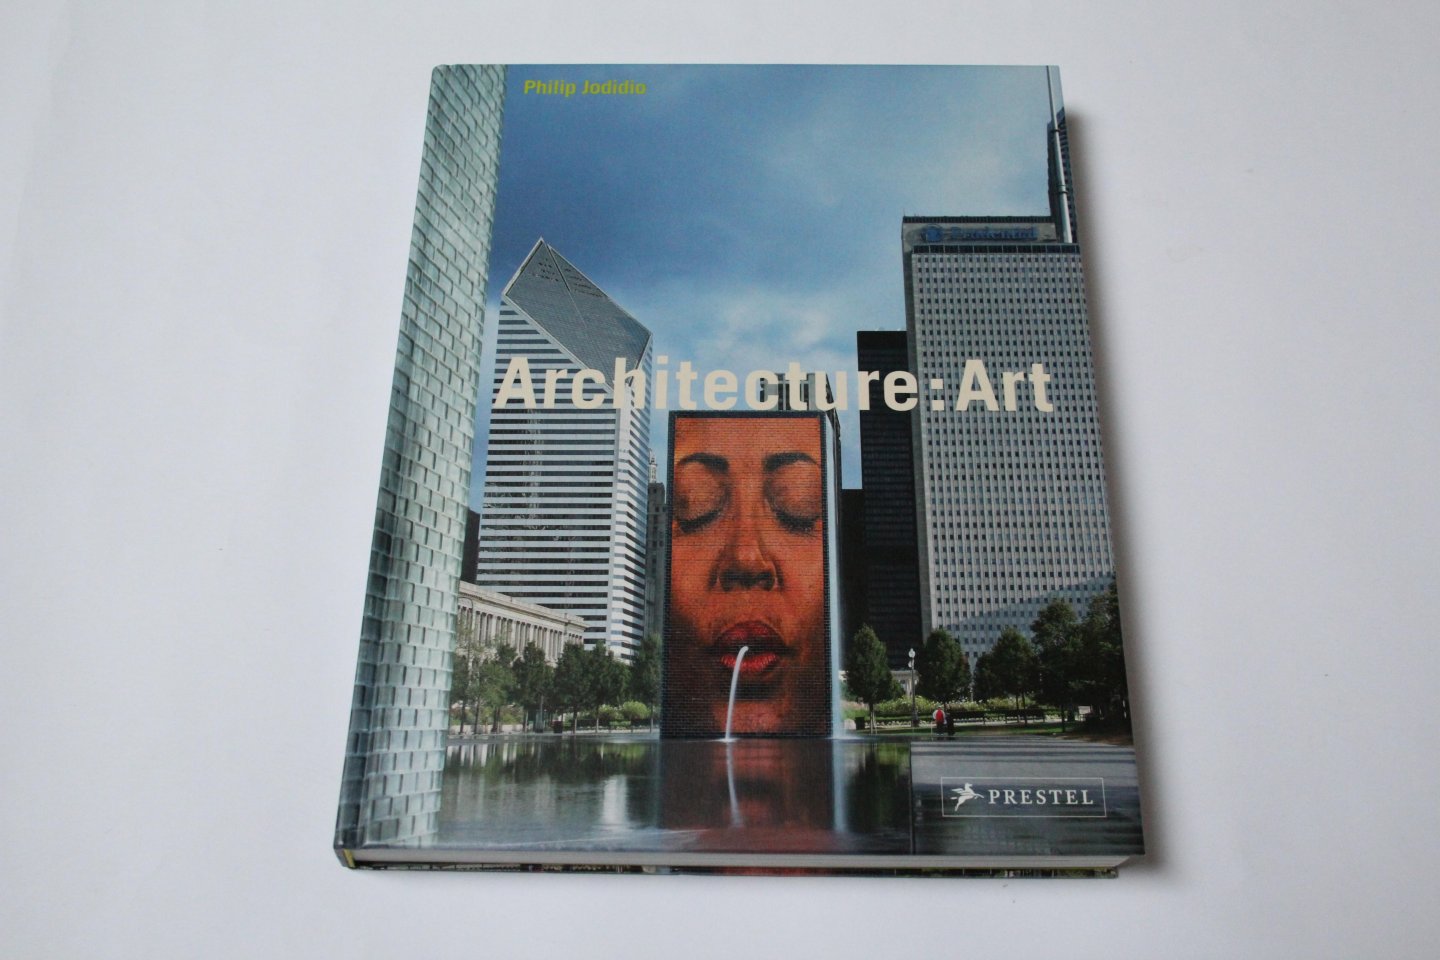 Jodidio, Philip - Architecture:art